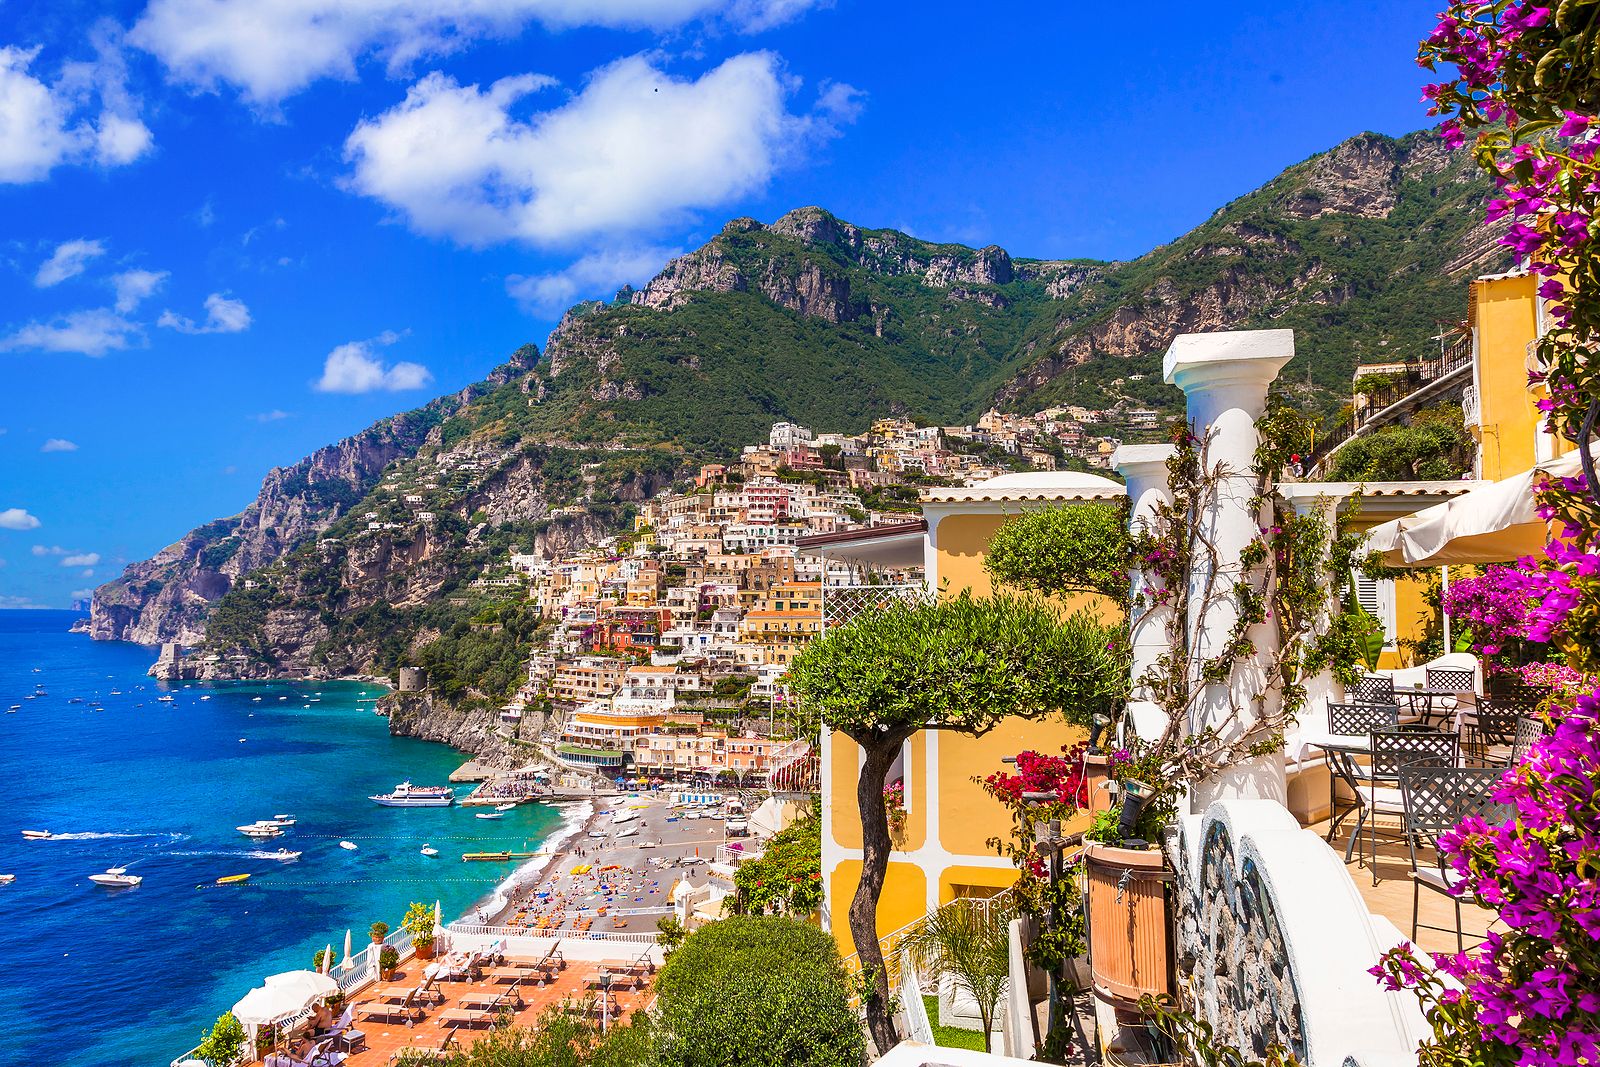 Descubre los secretos de la Costa Amalfitana foto: bigstock